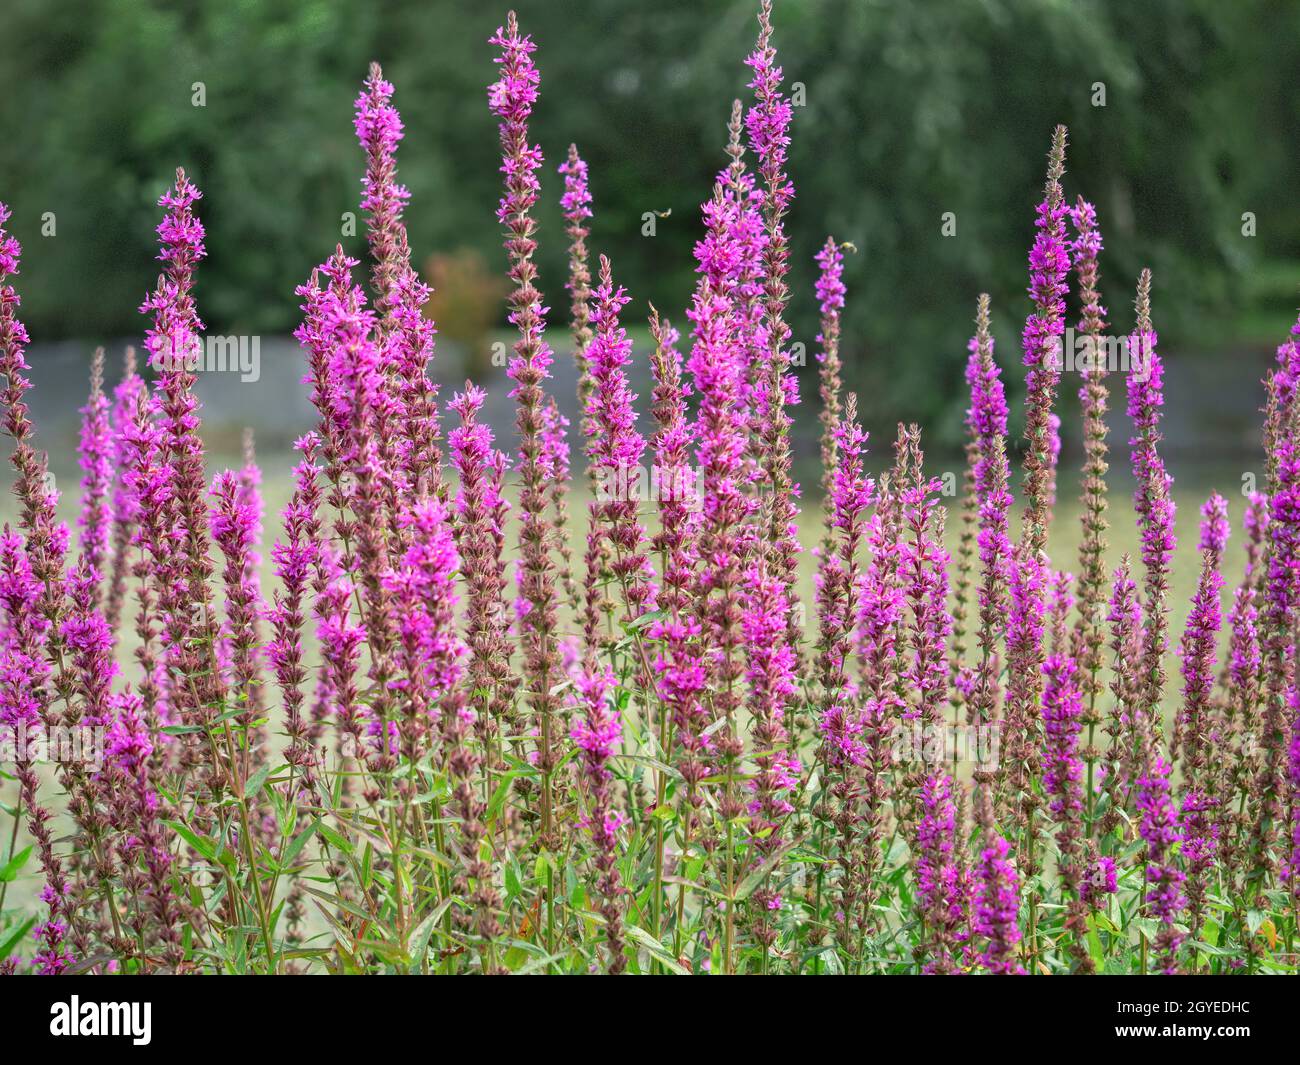 Tall purple loosestrife flower spikes in a garden, Lythrum virgatum Rosy Gem Stock Photo